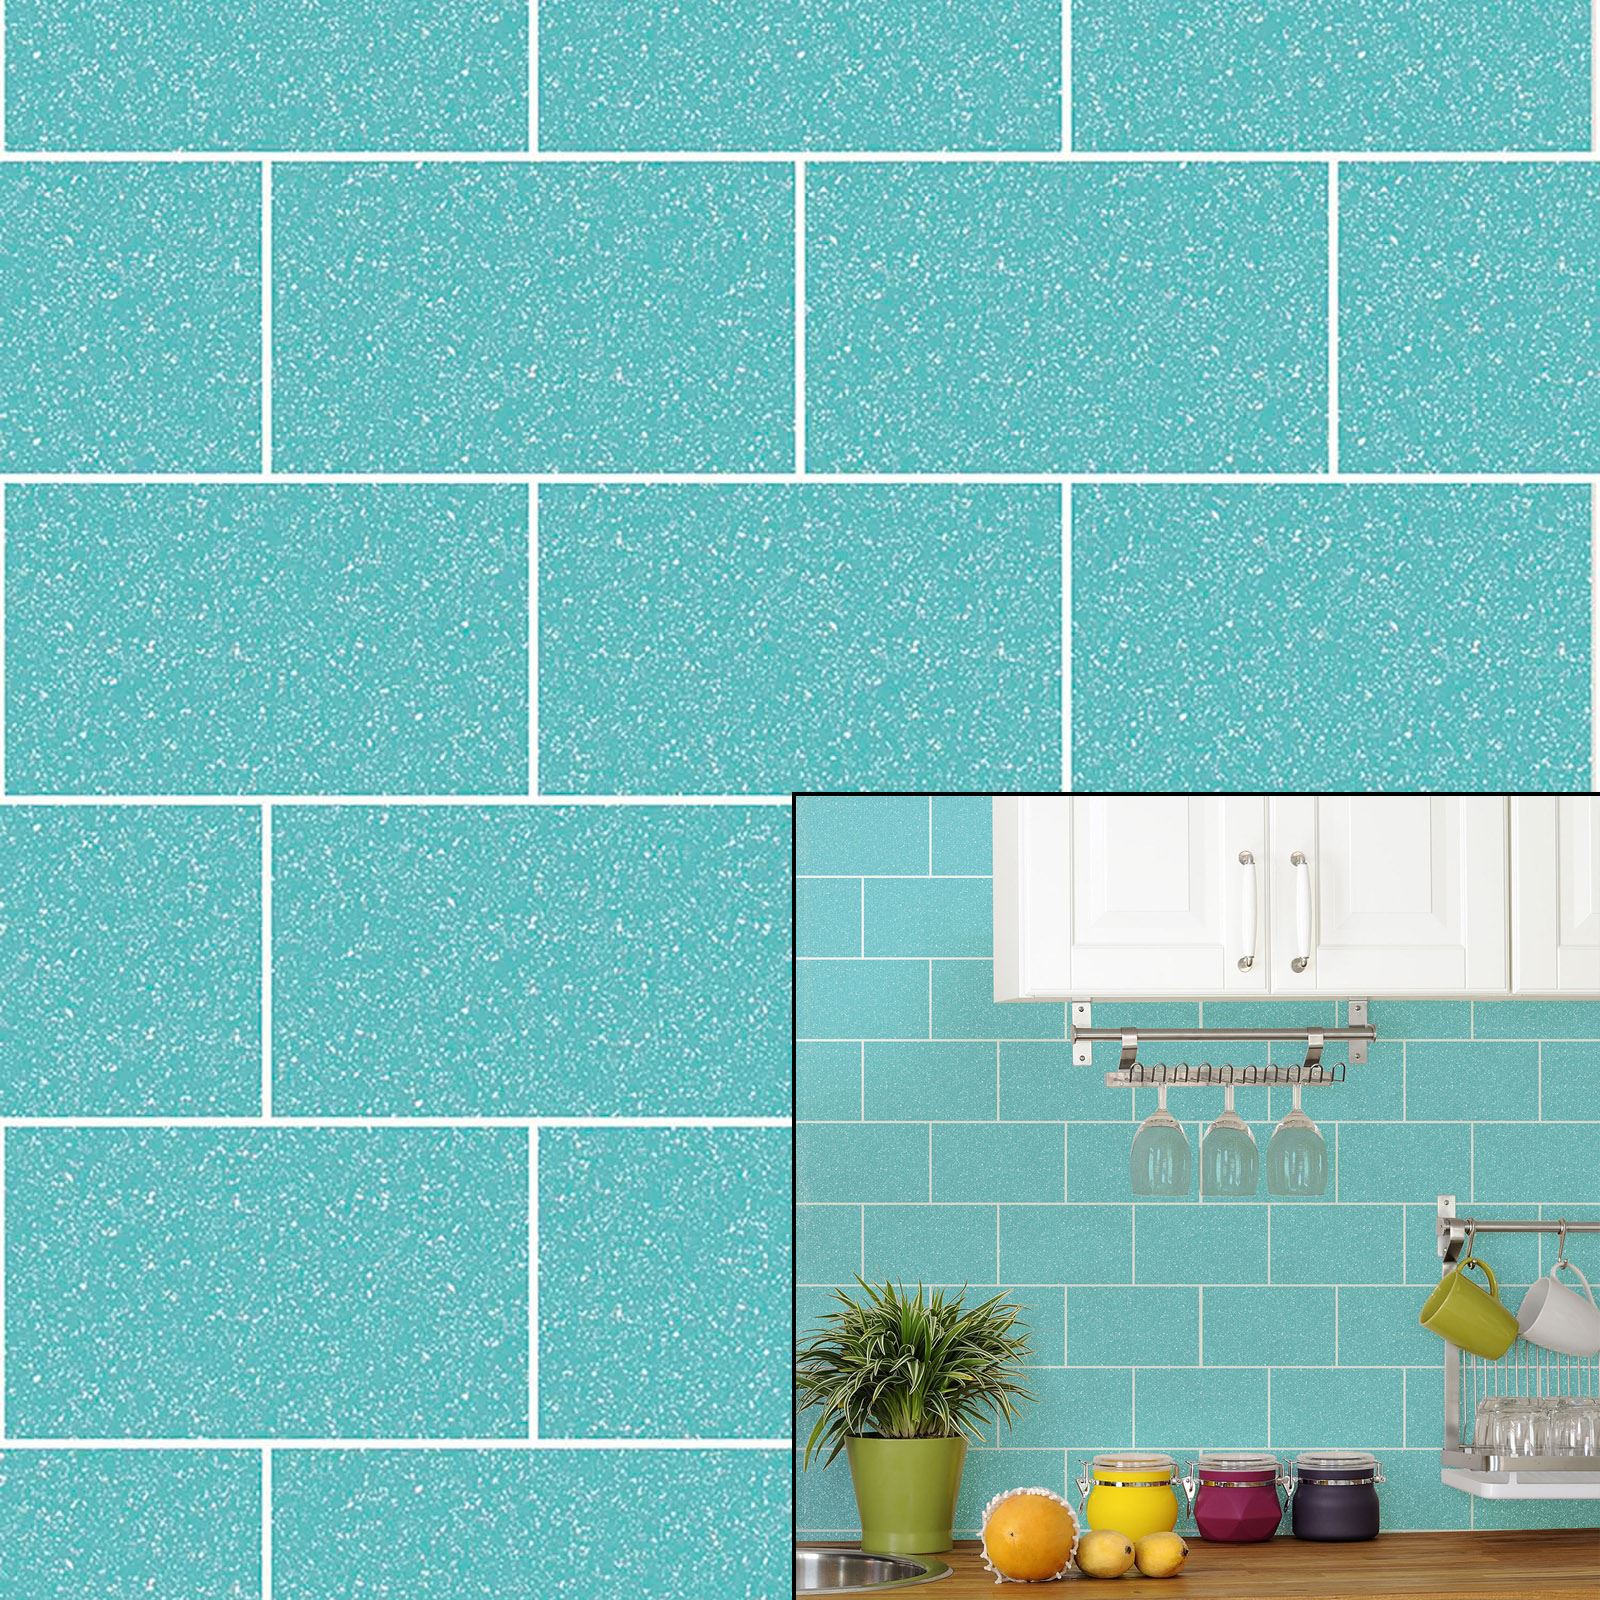 Tile Effect Wallpaper For Kitchen - HD Wallpaper 